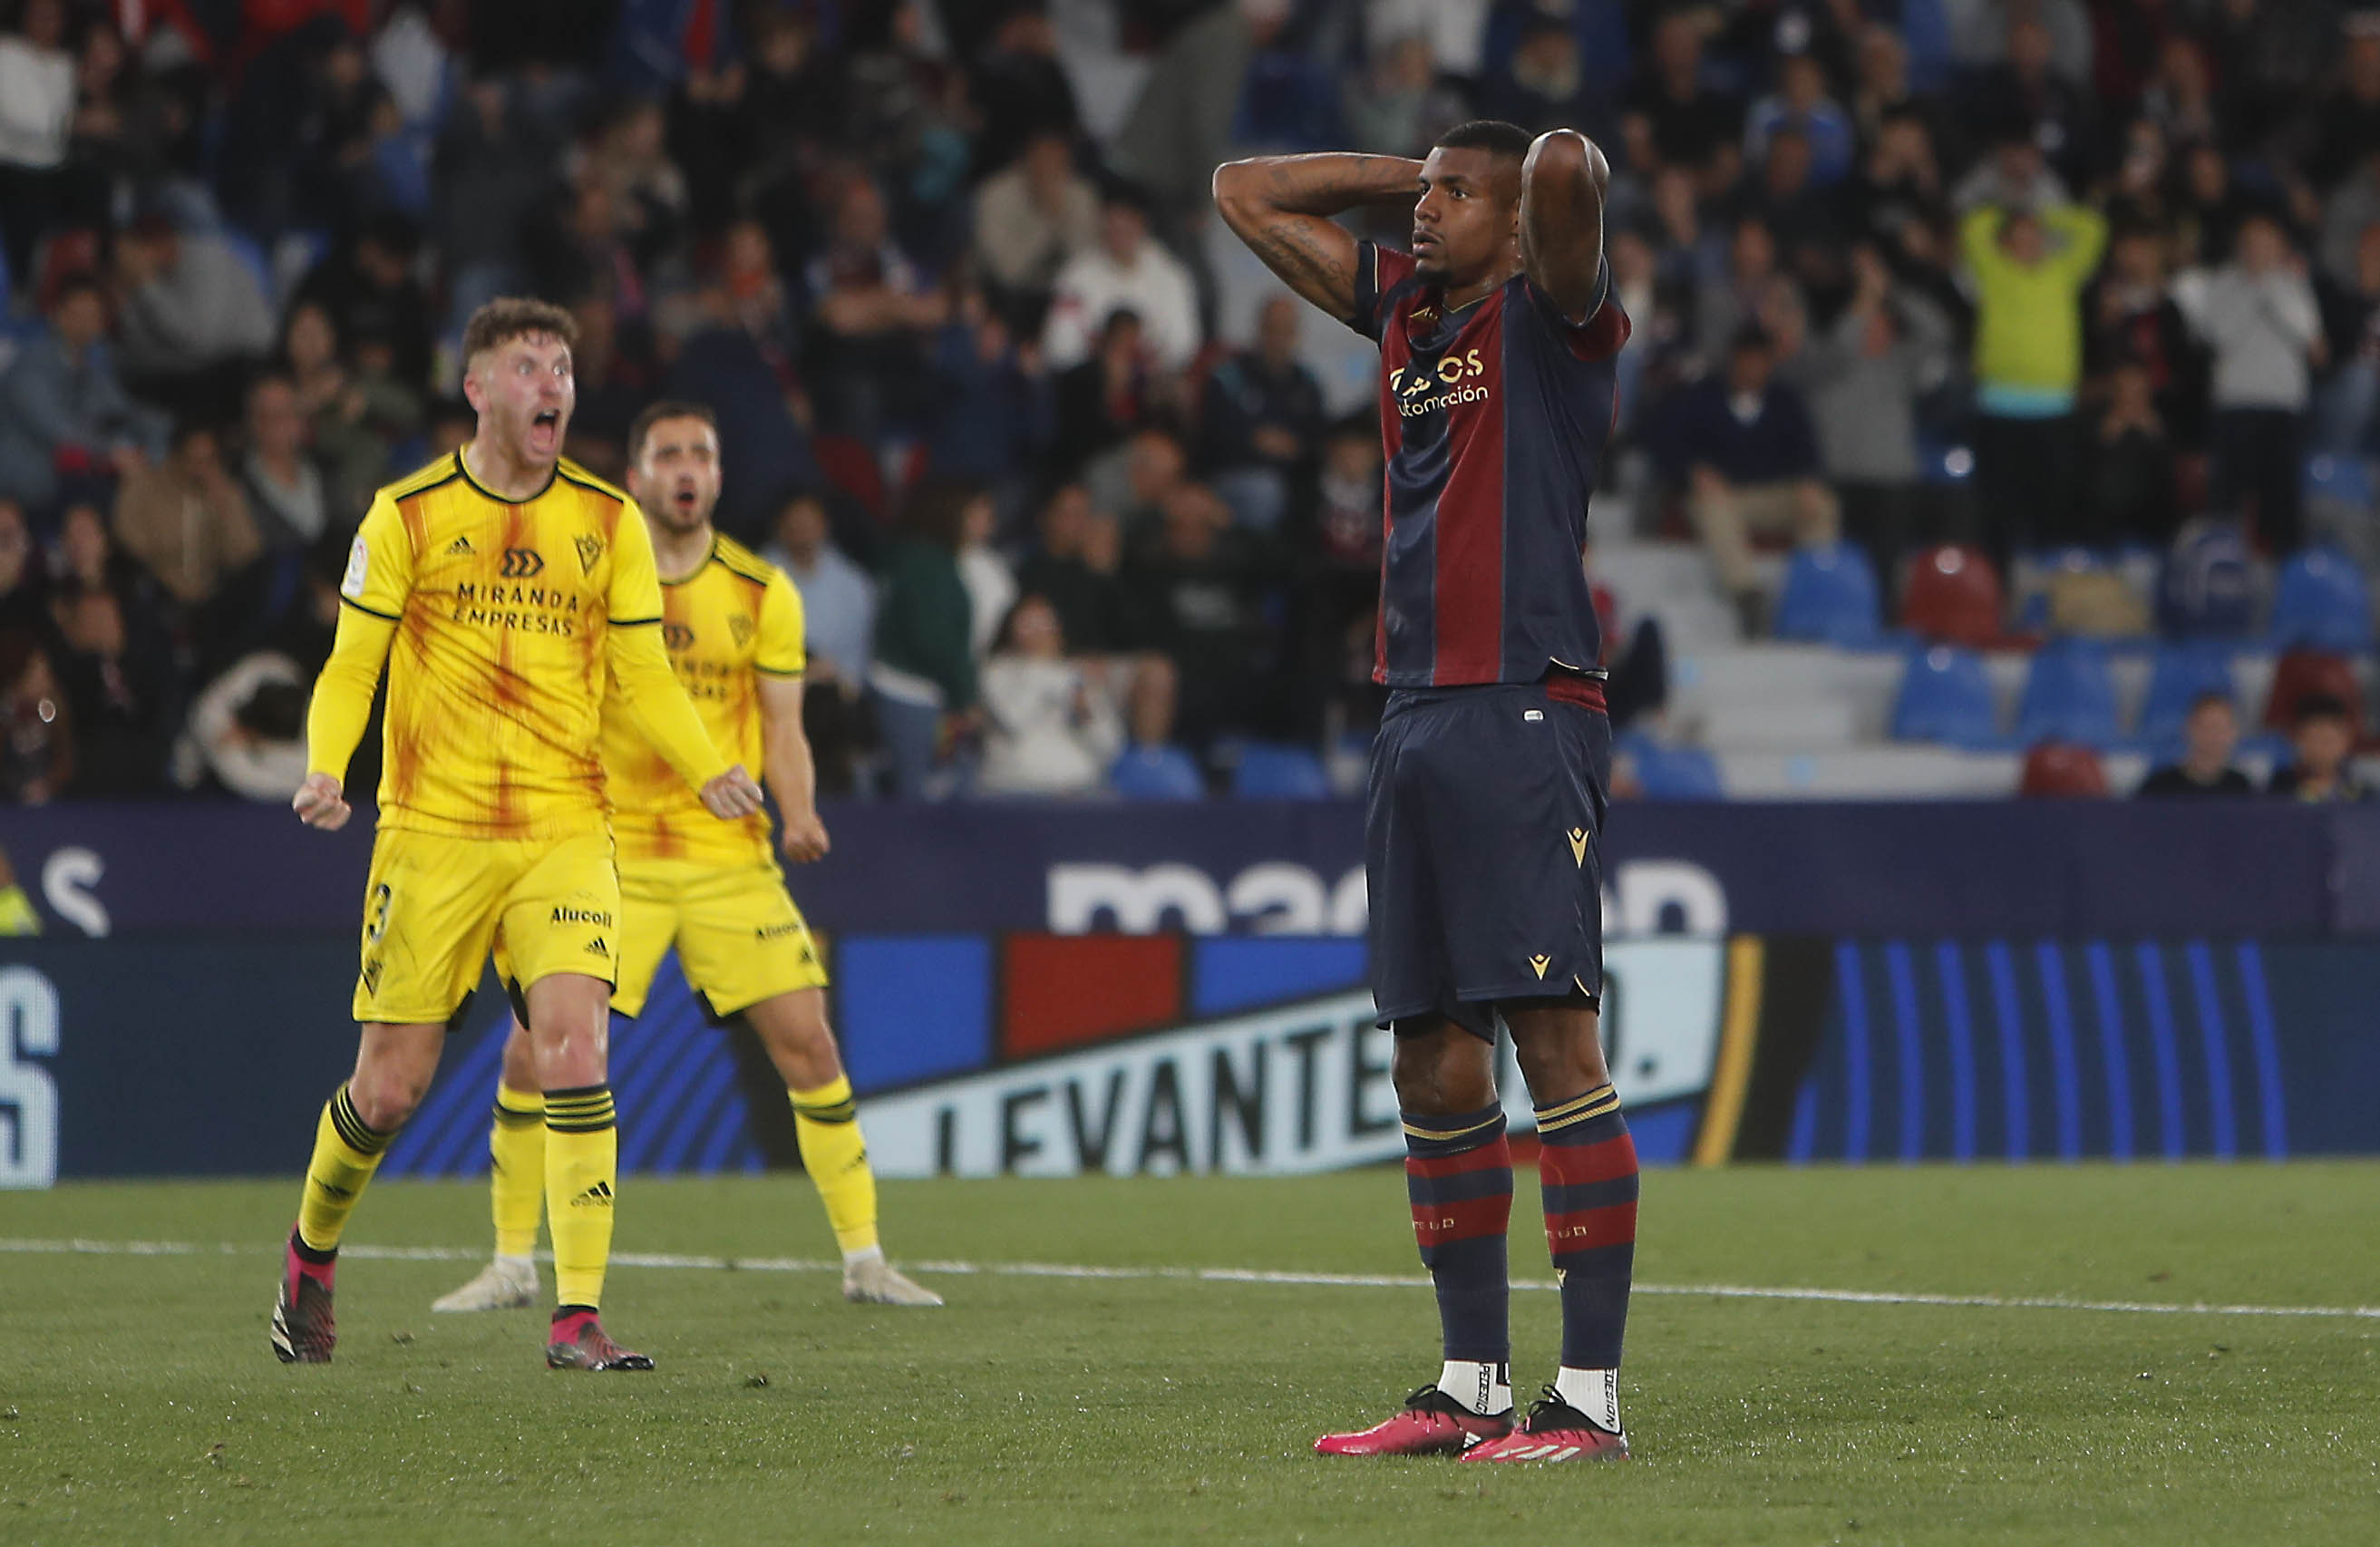 Resumen y goles del Levante vs Mirandés, jornada 36 de LaLiga SmartBank